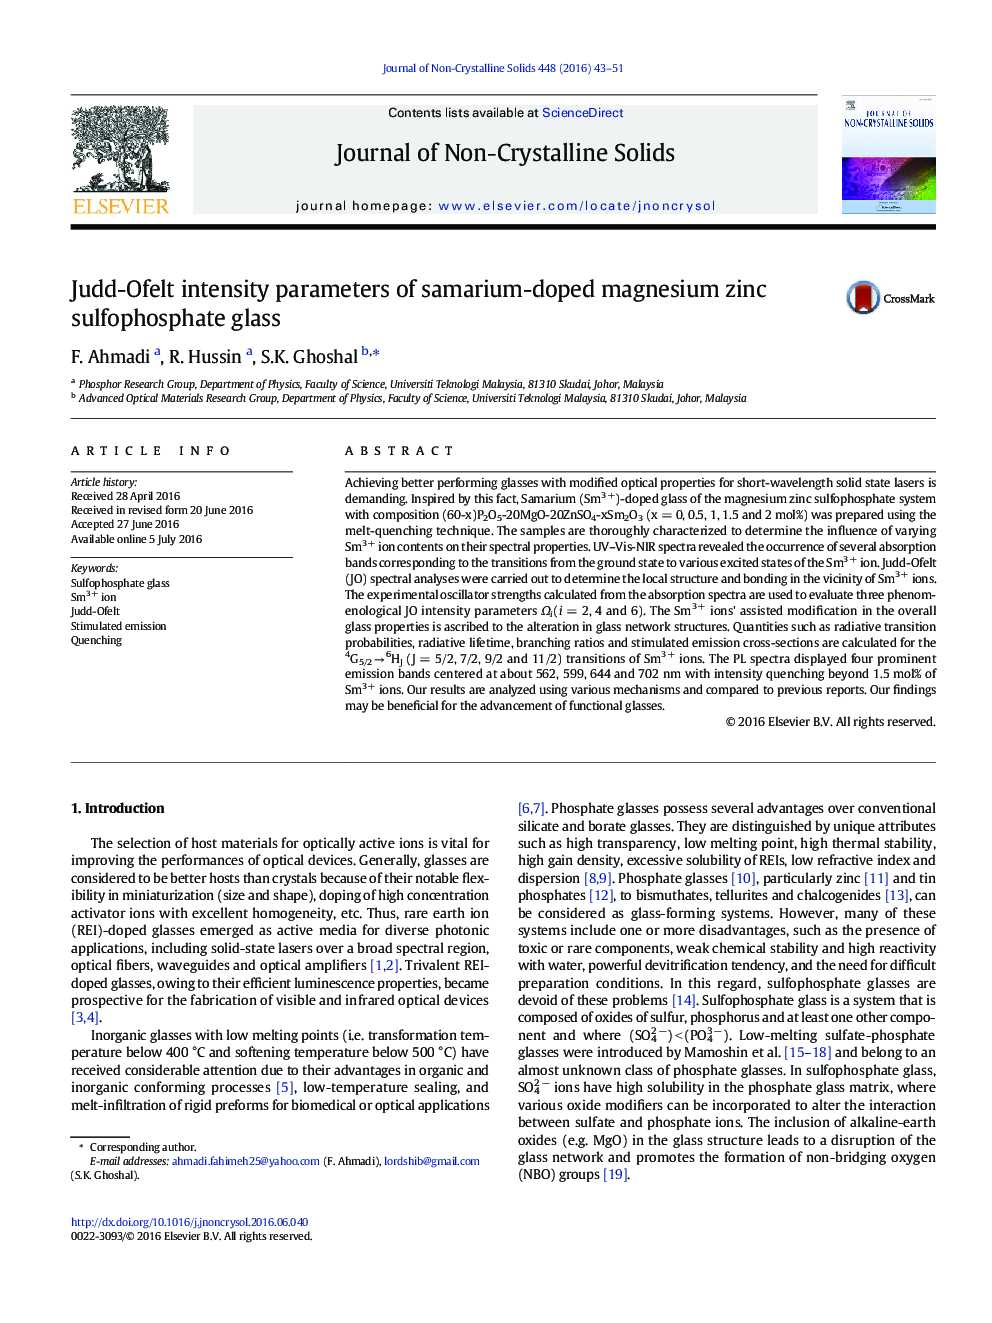 Judd-Ofelt intensity parameters of samarium-doped magnesium zinc sulfophosphate glass